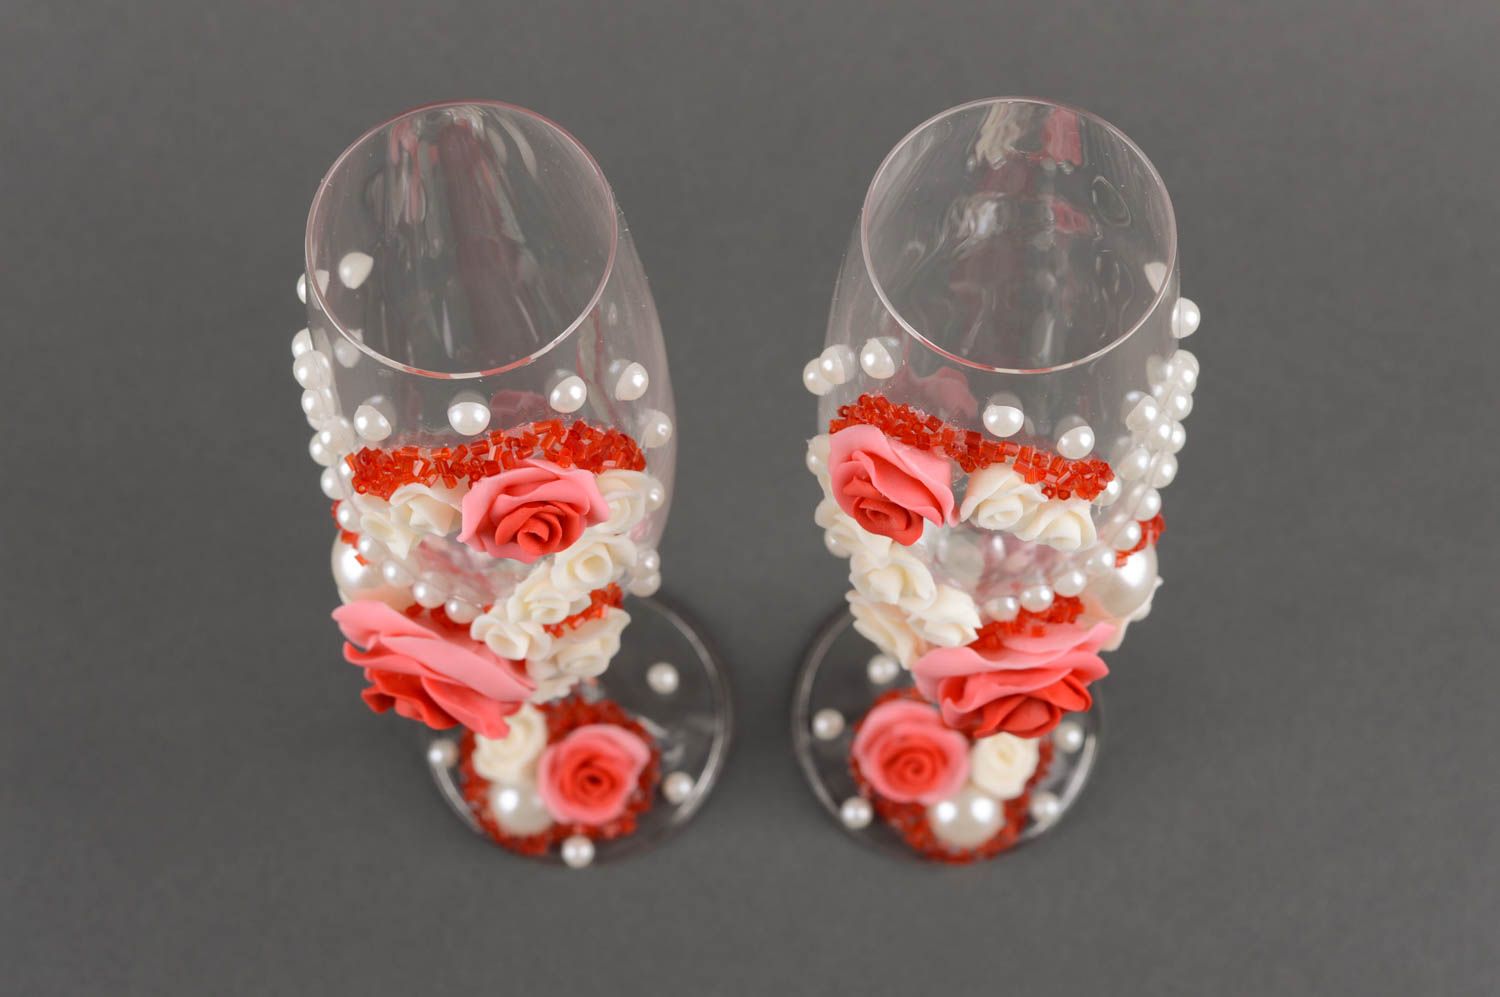 Unusual handmade wedding glasses 2 pieces wedding accessories glass ware photo 10